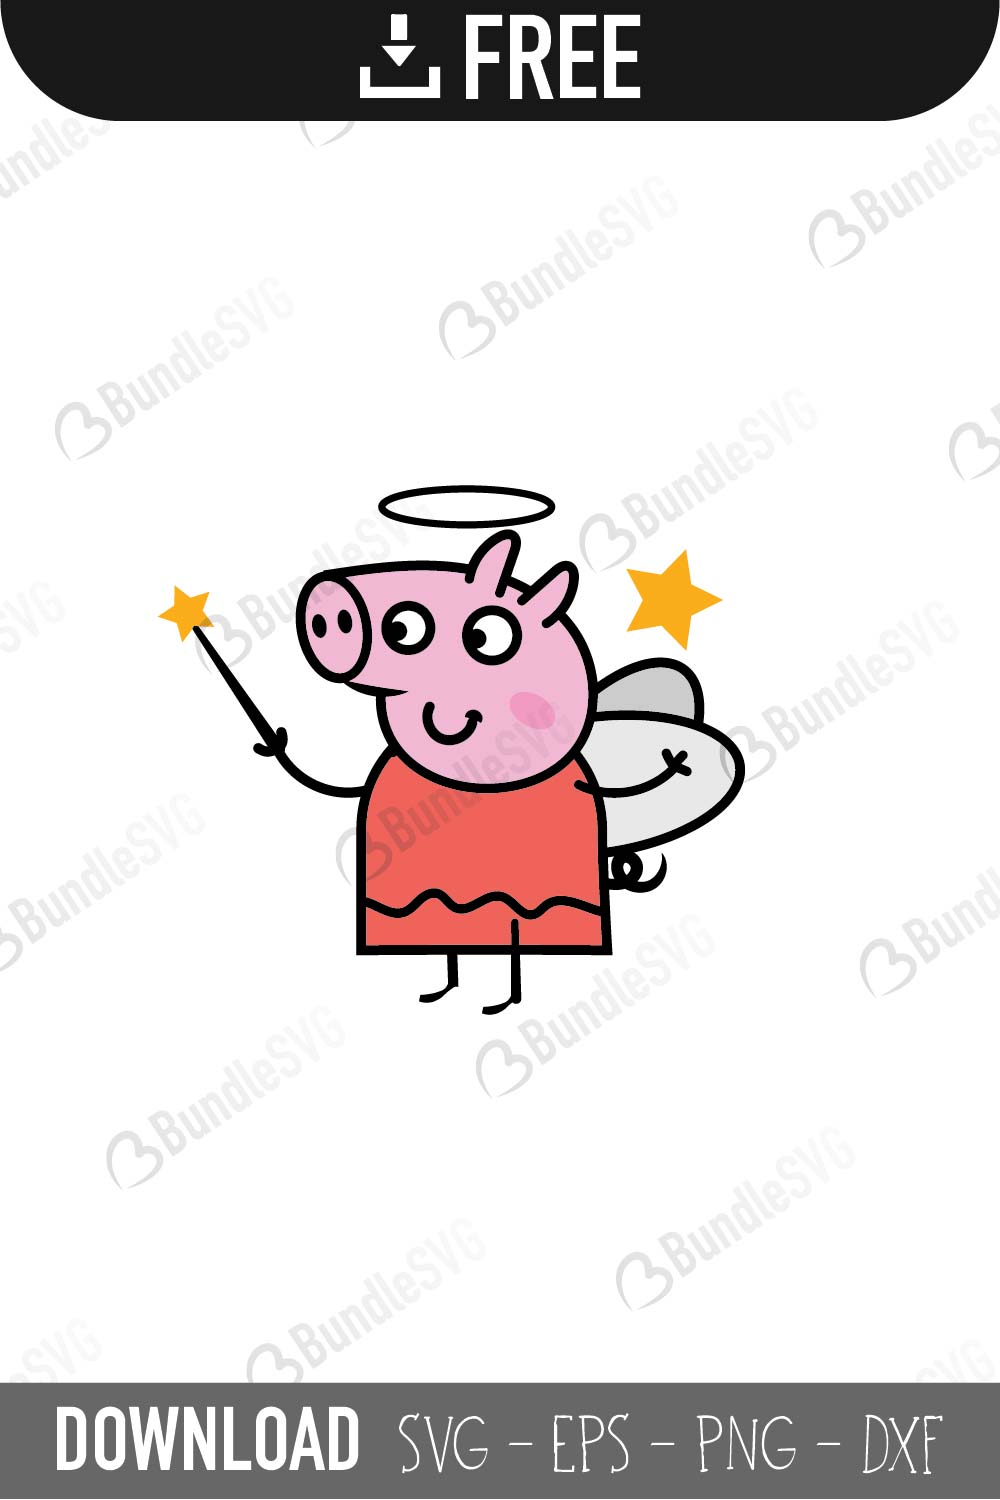 Free Peppa Pig SVG Cut Files Free Download | BundleSVG.com